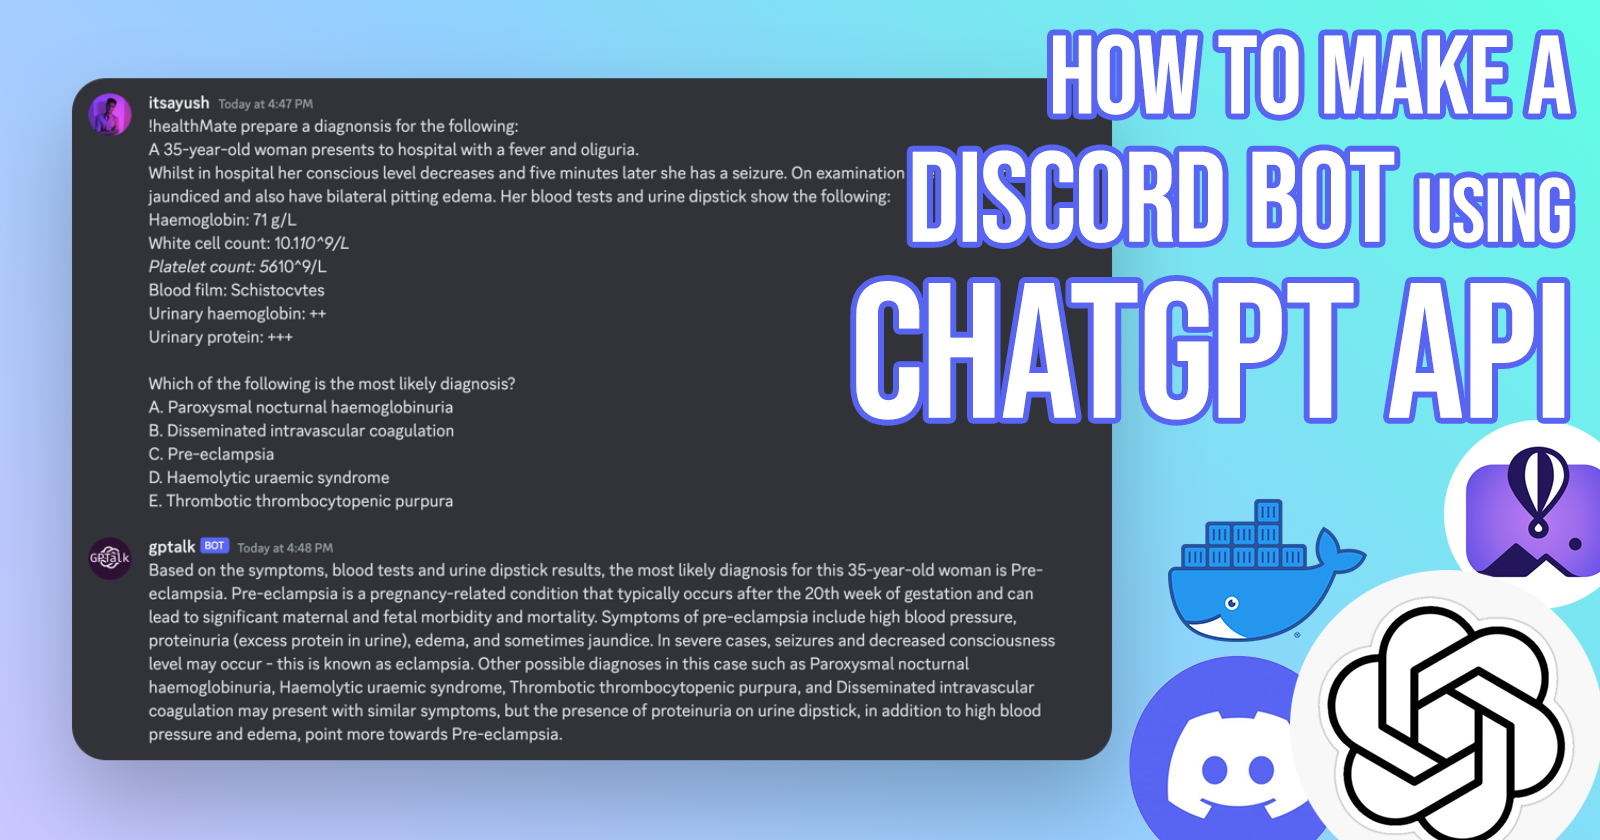 Create AI-powered Discord bot with ChatGPT API